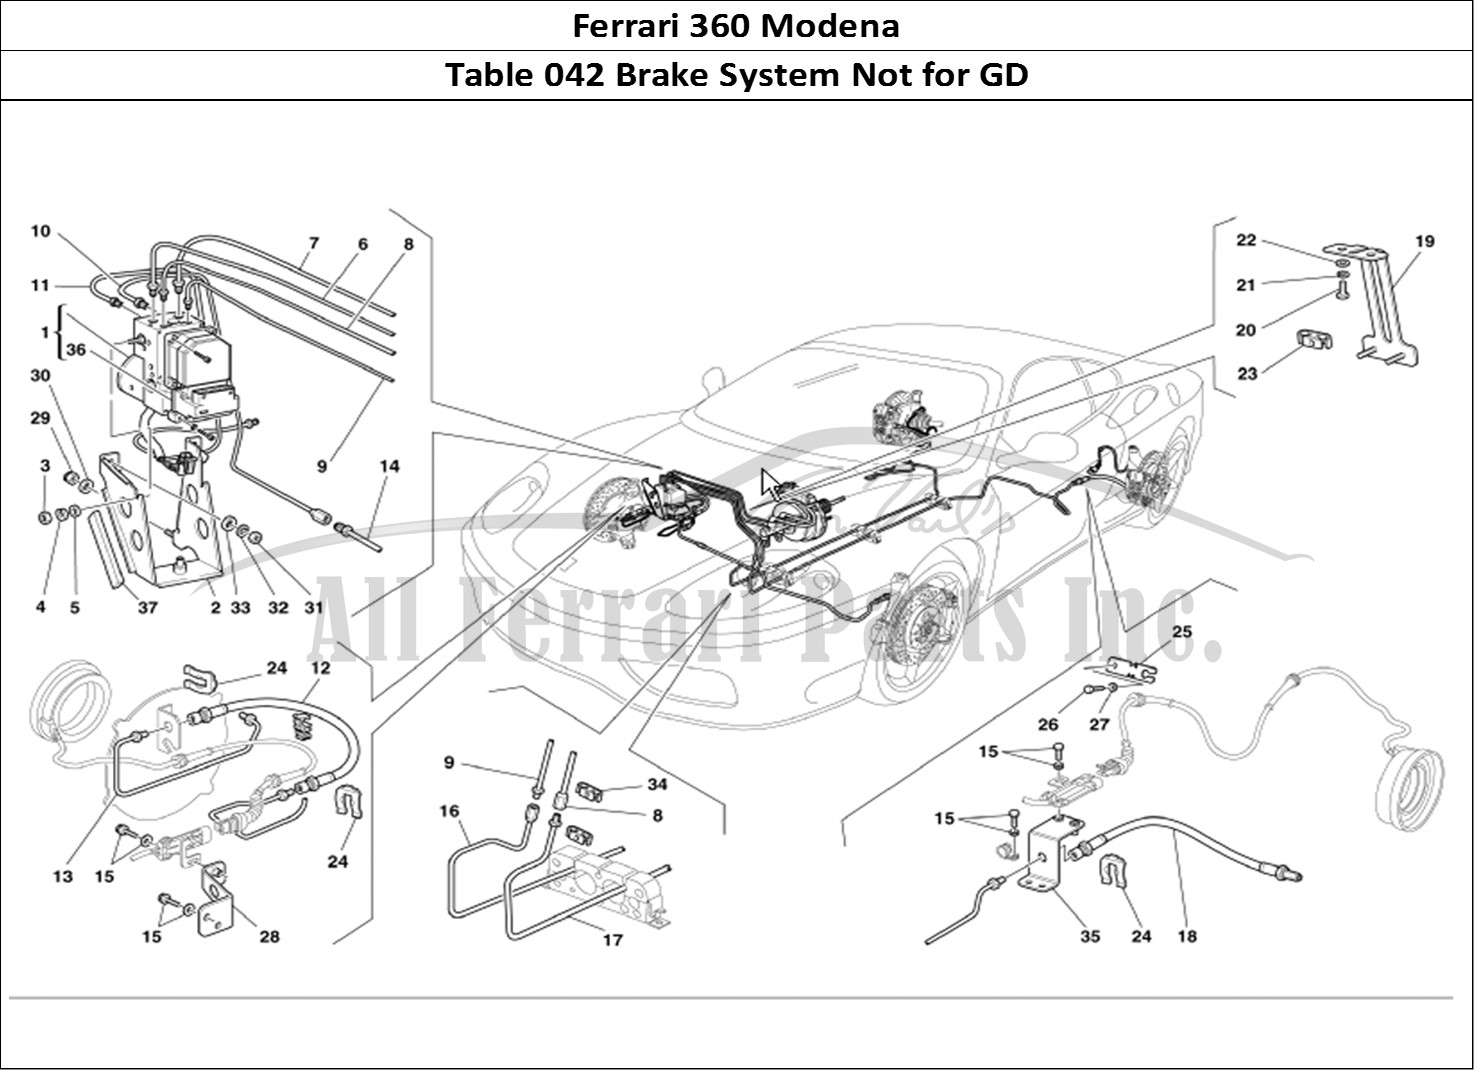 Ferrari Parts Ferrari 360 Modena Page 042 Brake System -Not for GD-